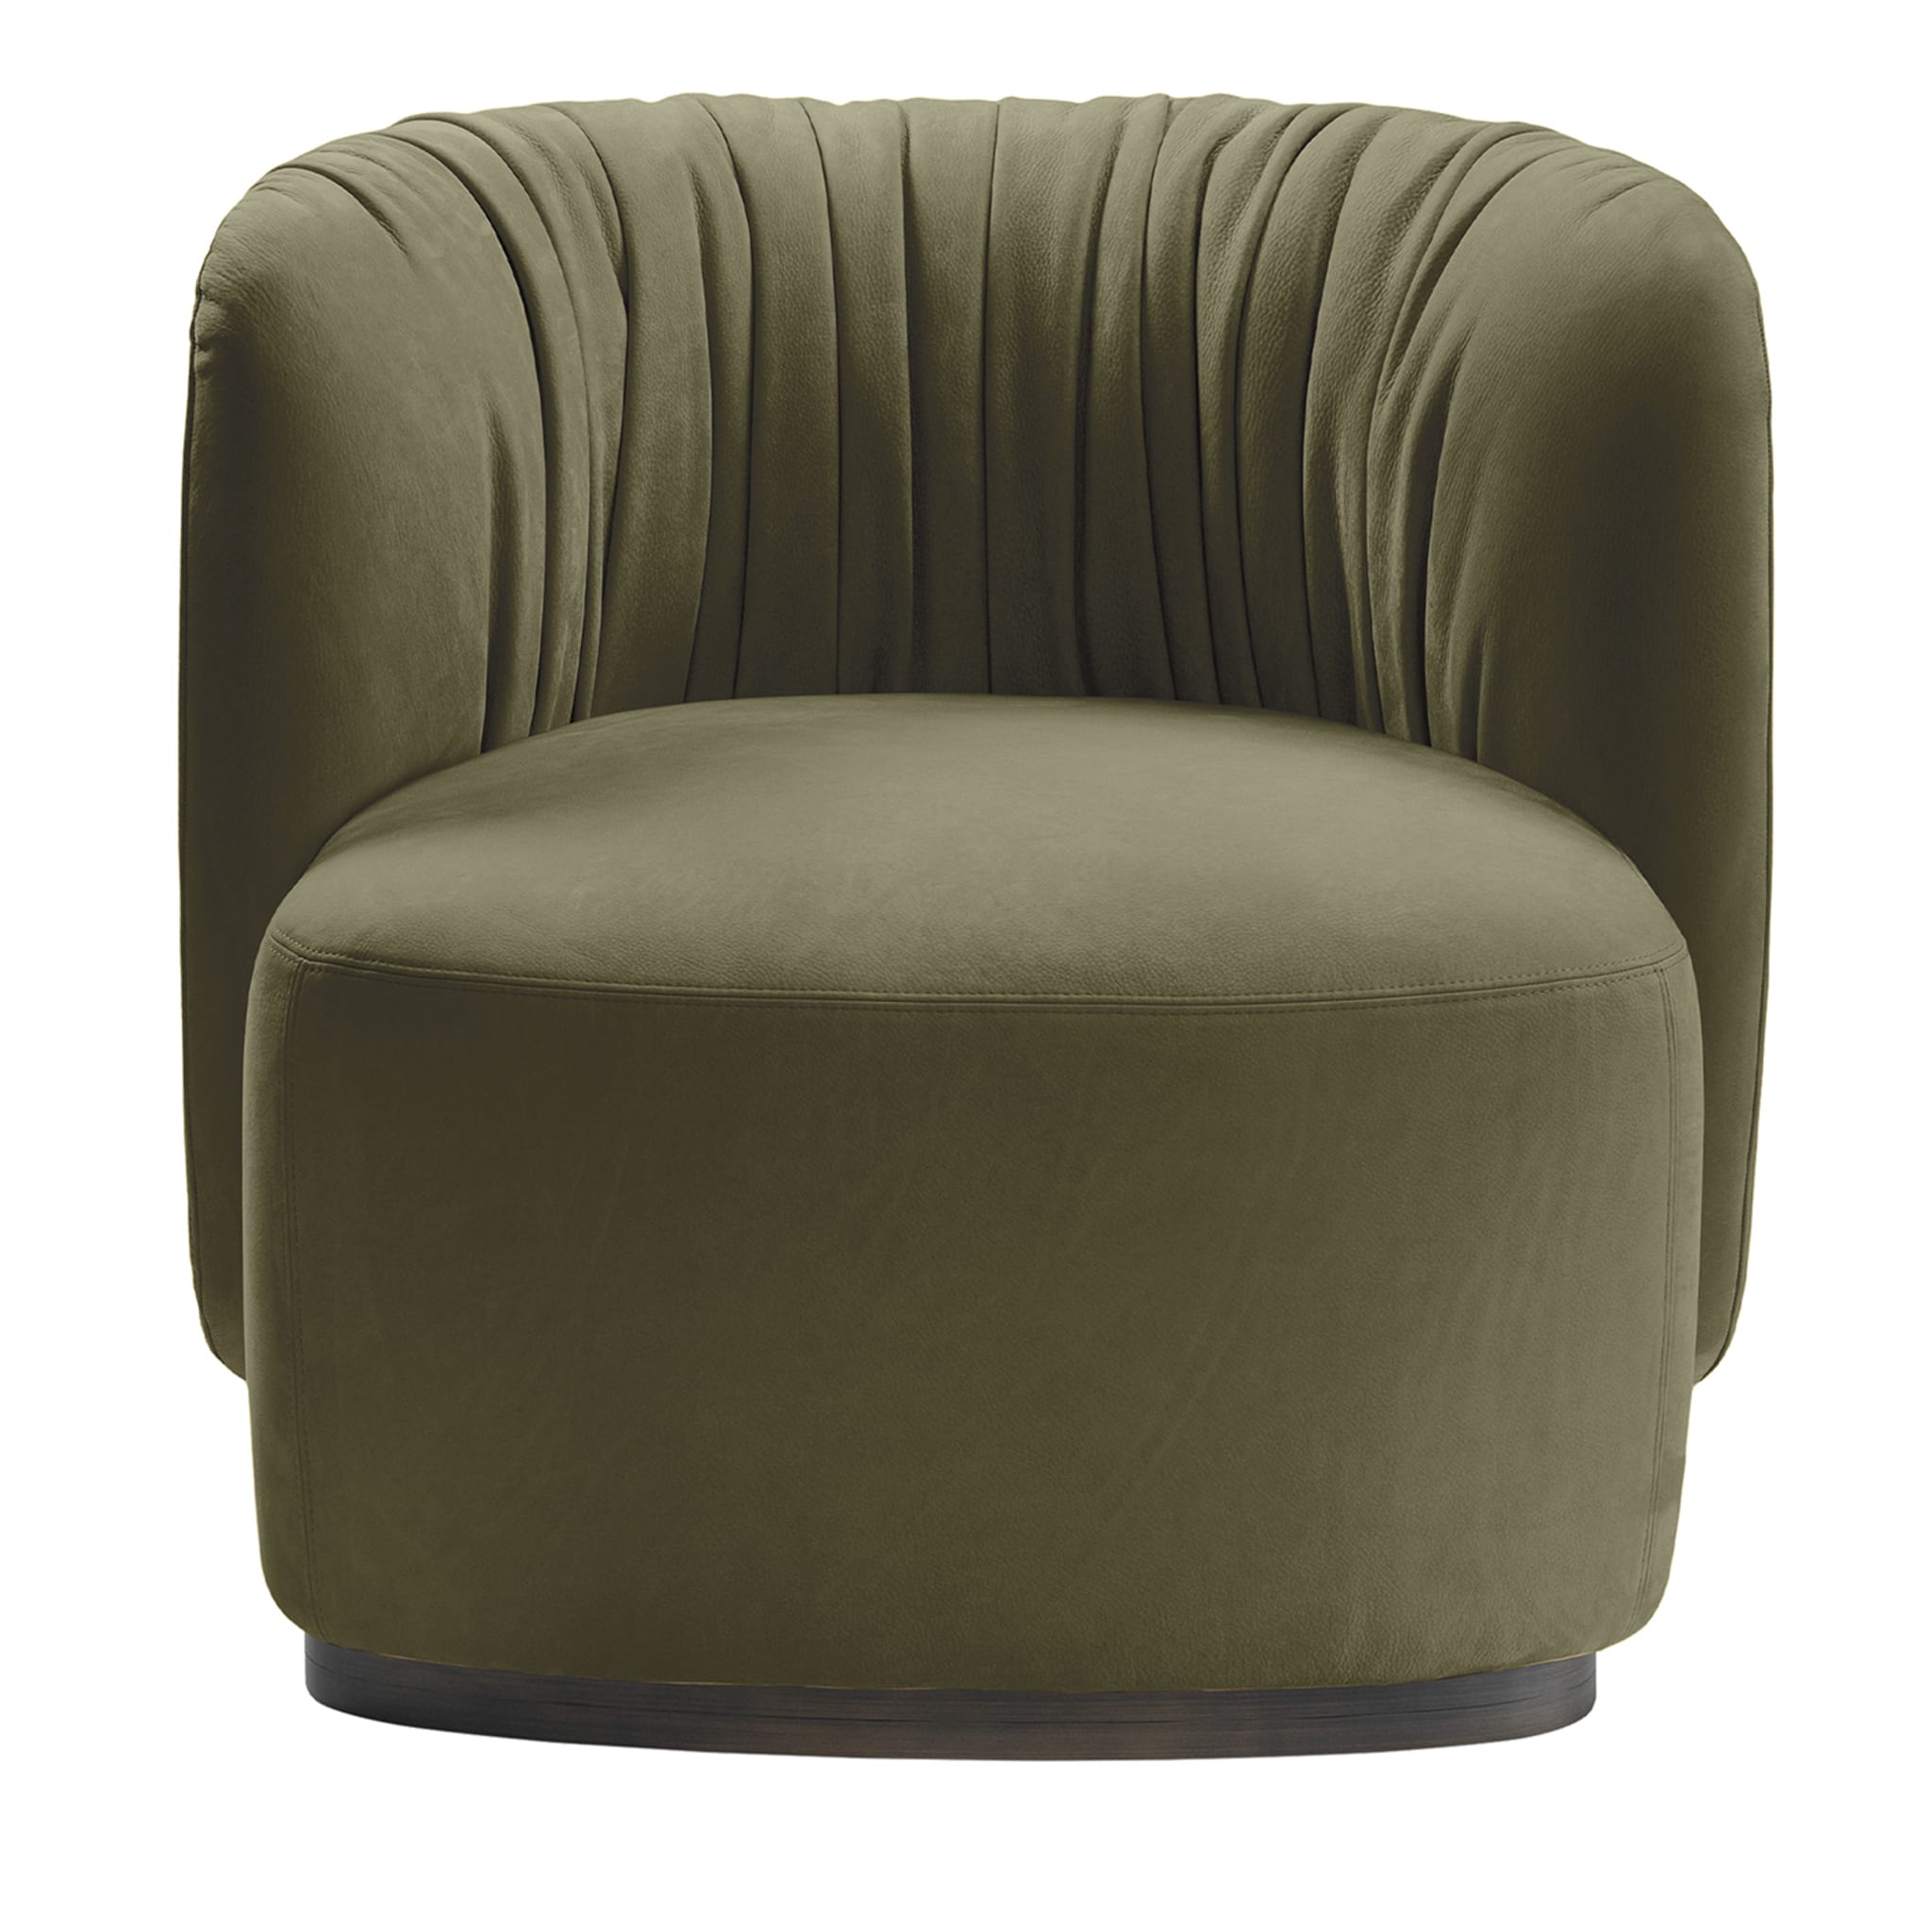 Sipario Green Armchair by Lorenza Bozzoli - Main view